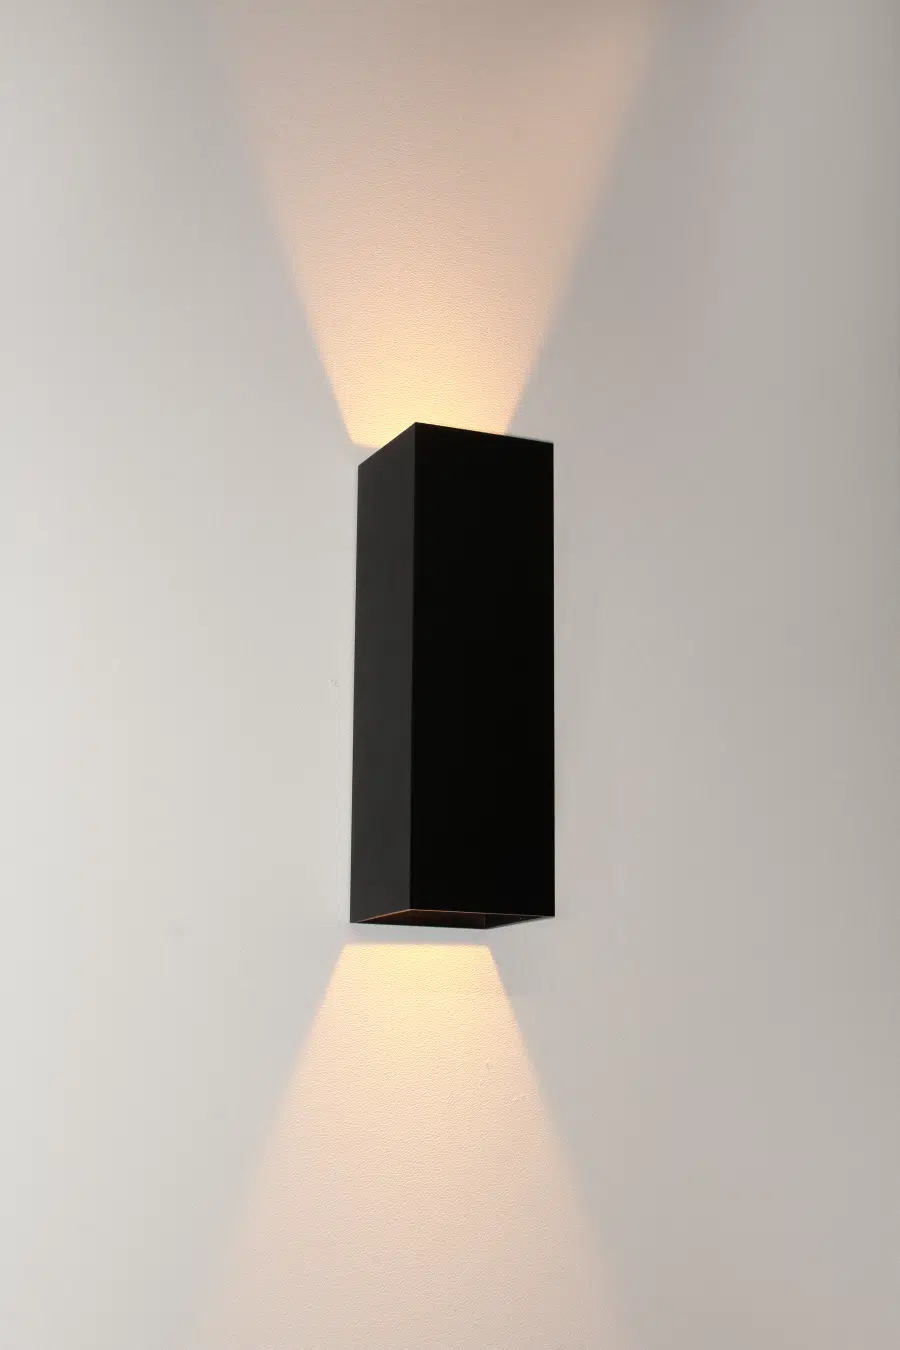 Buitenlamp Vegas groot 250 zwart wandlamp up-down artdelight tuinextra